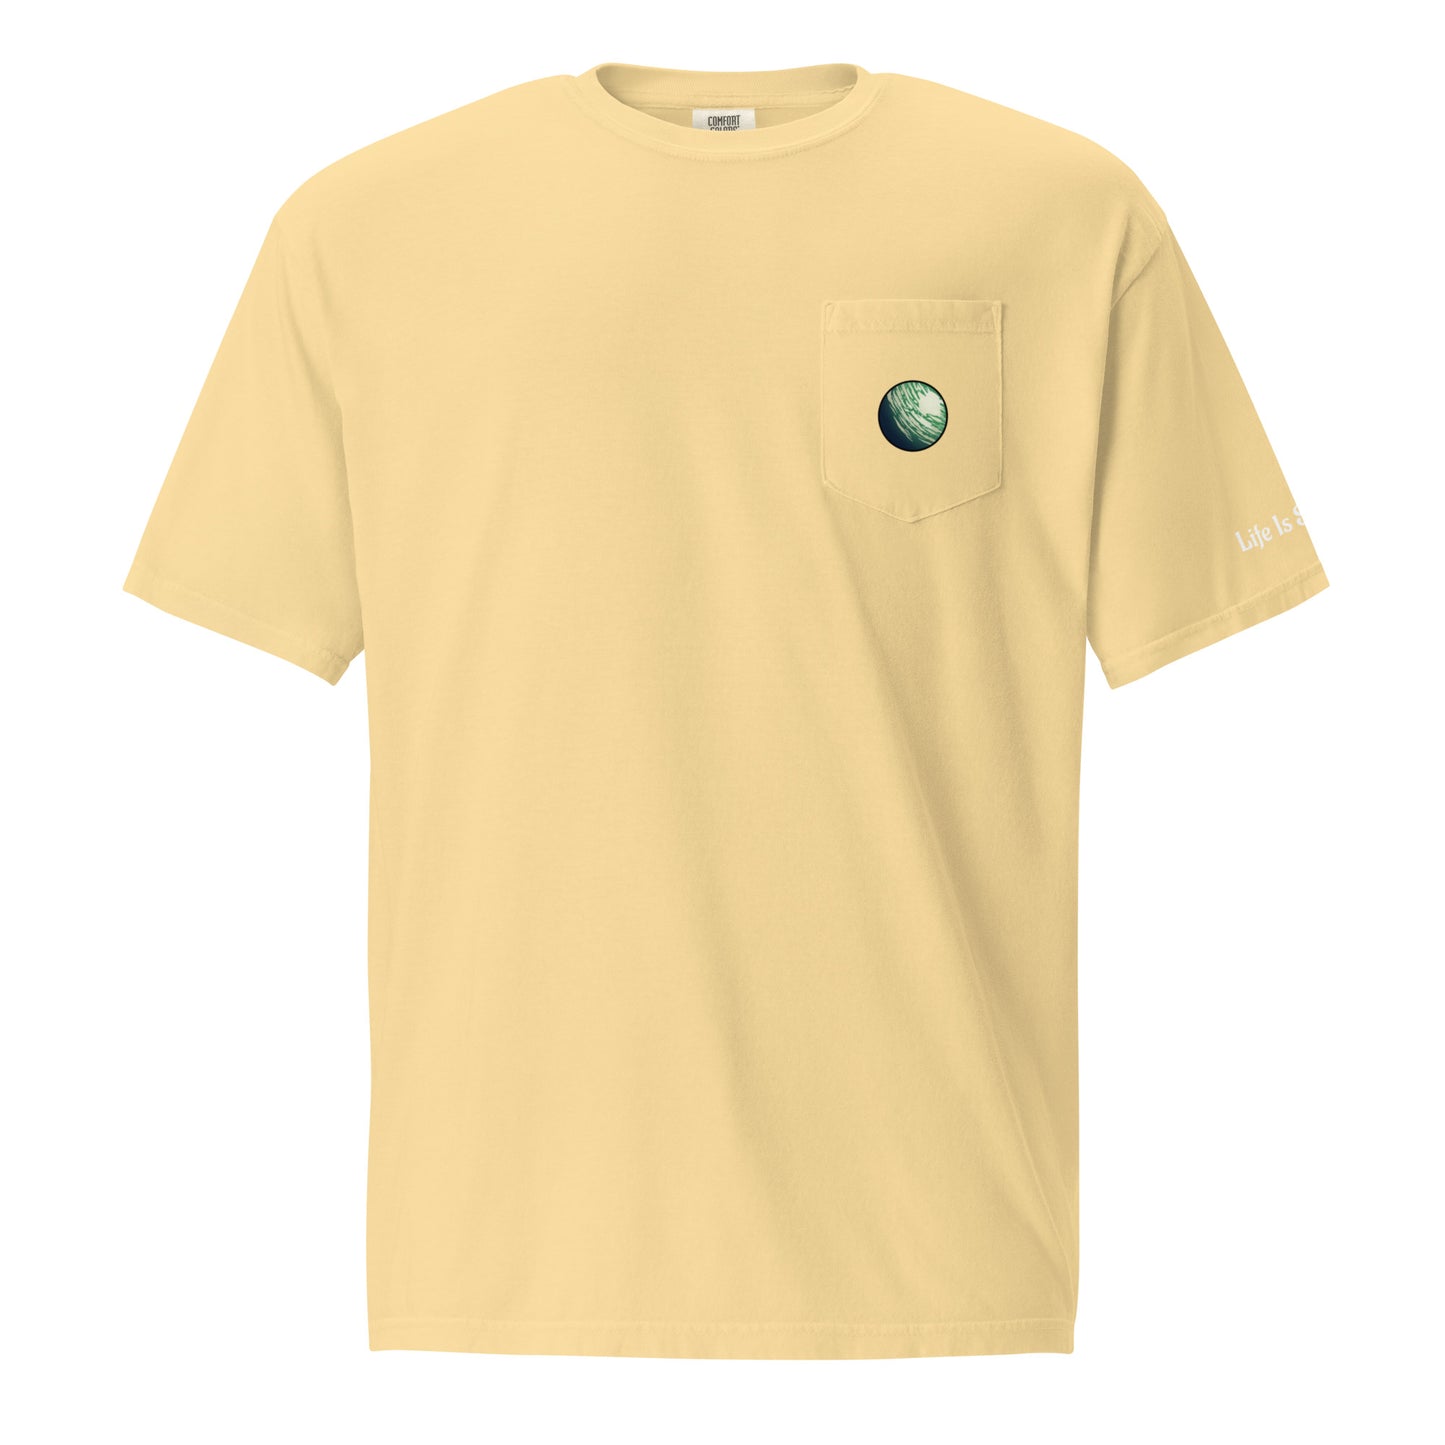 L.I.S Planet Colored Pocket T-Shirt